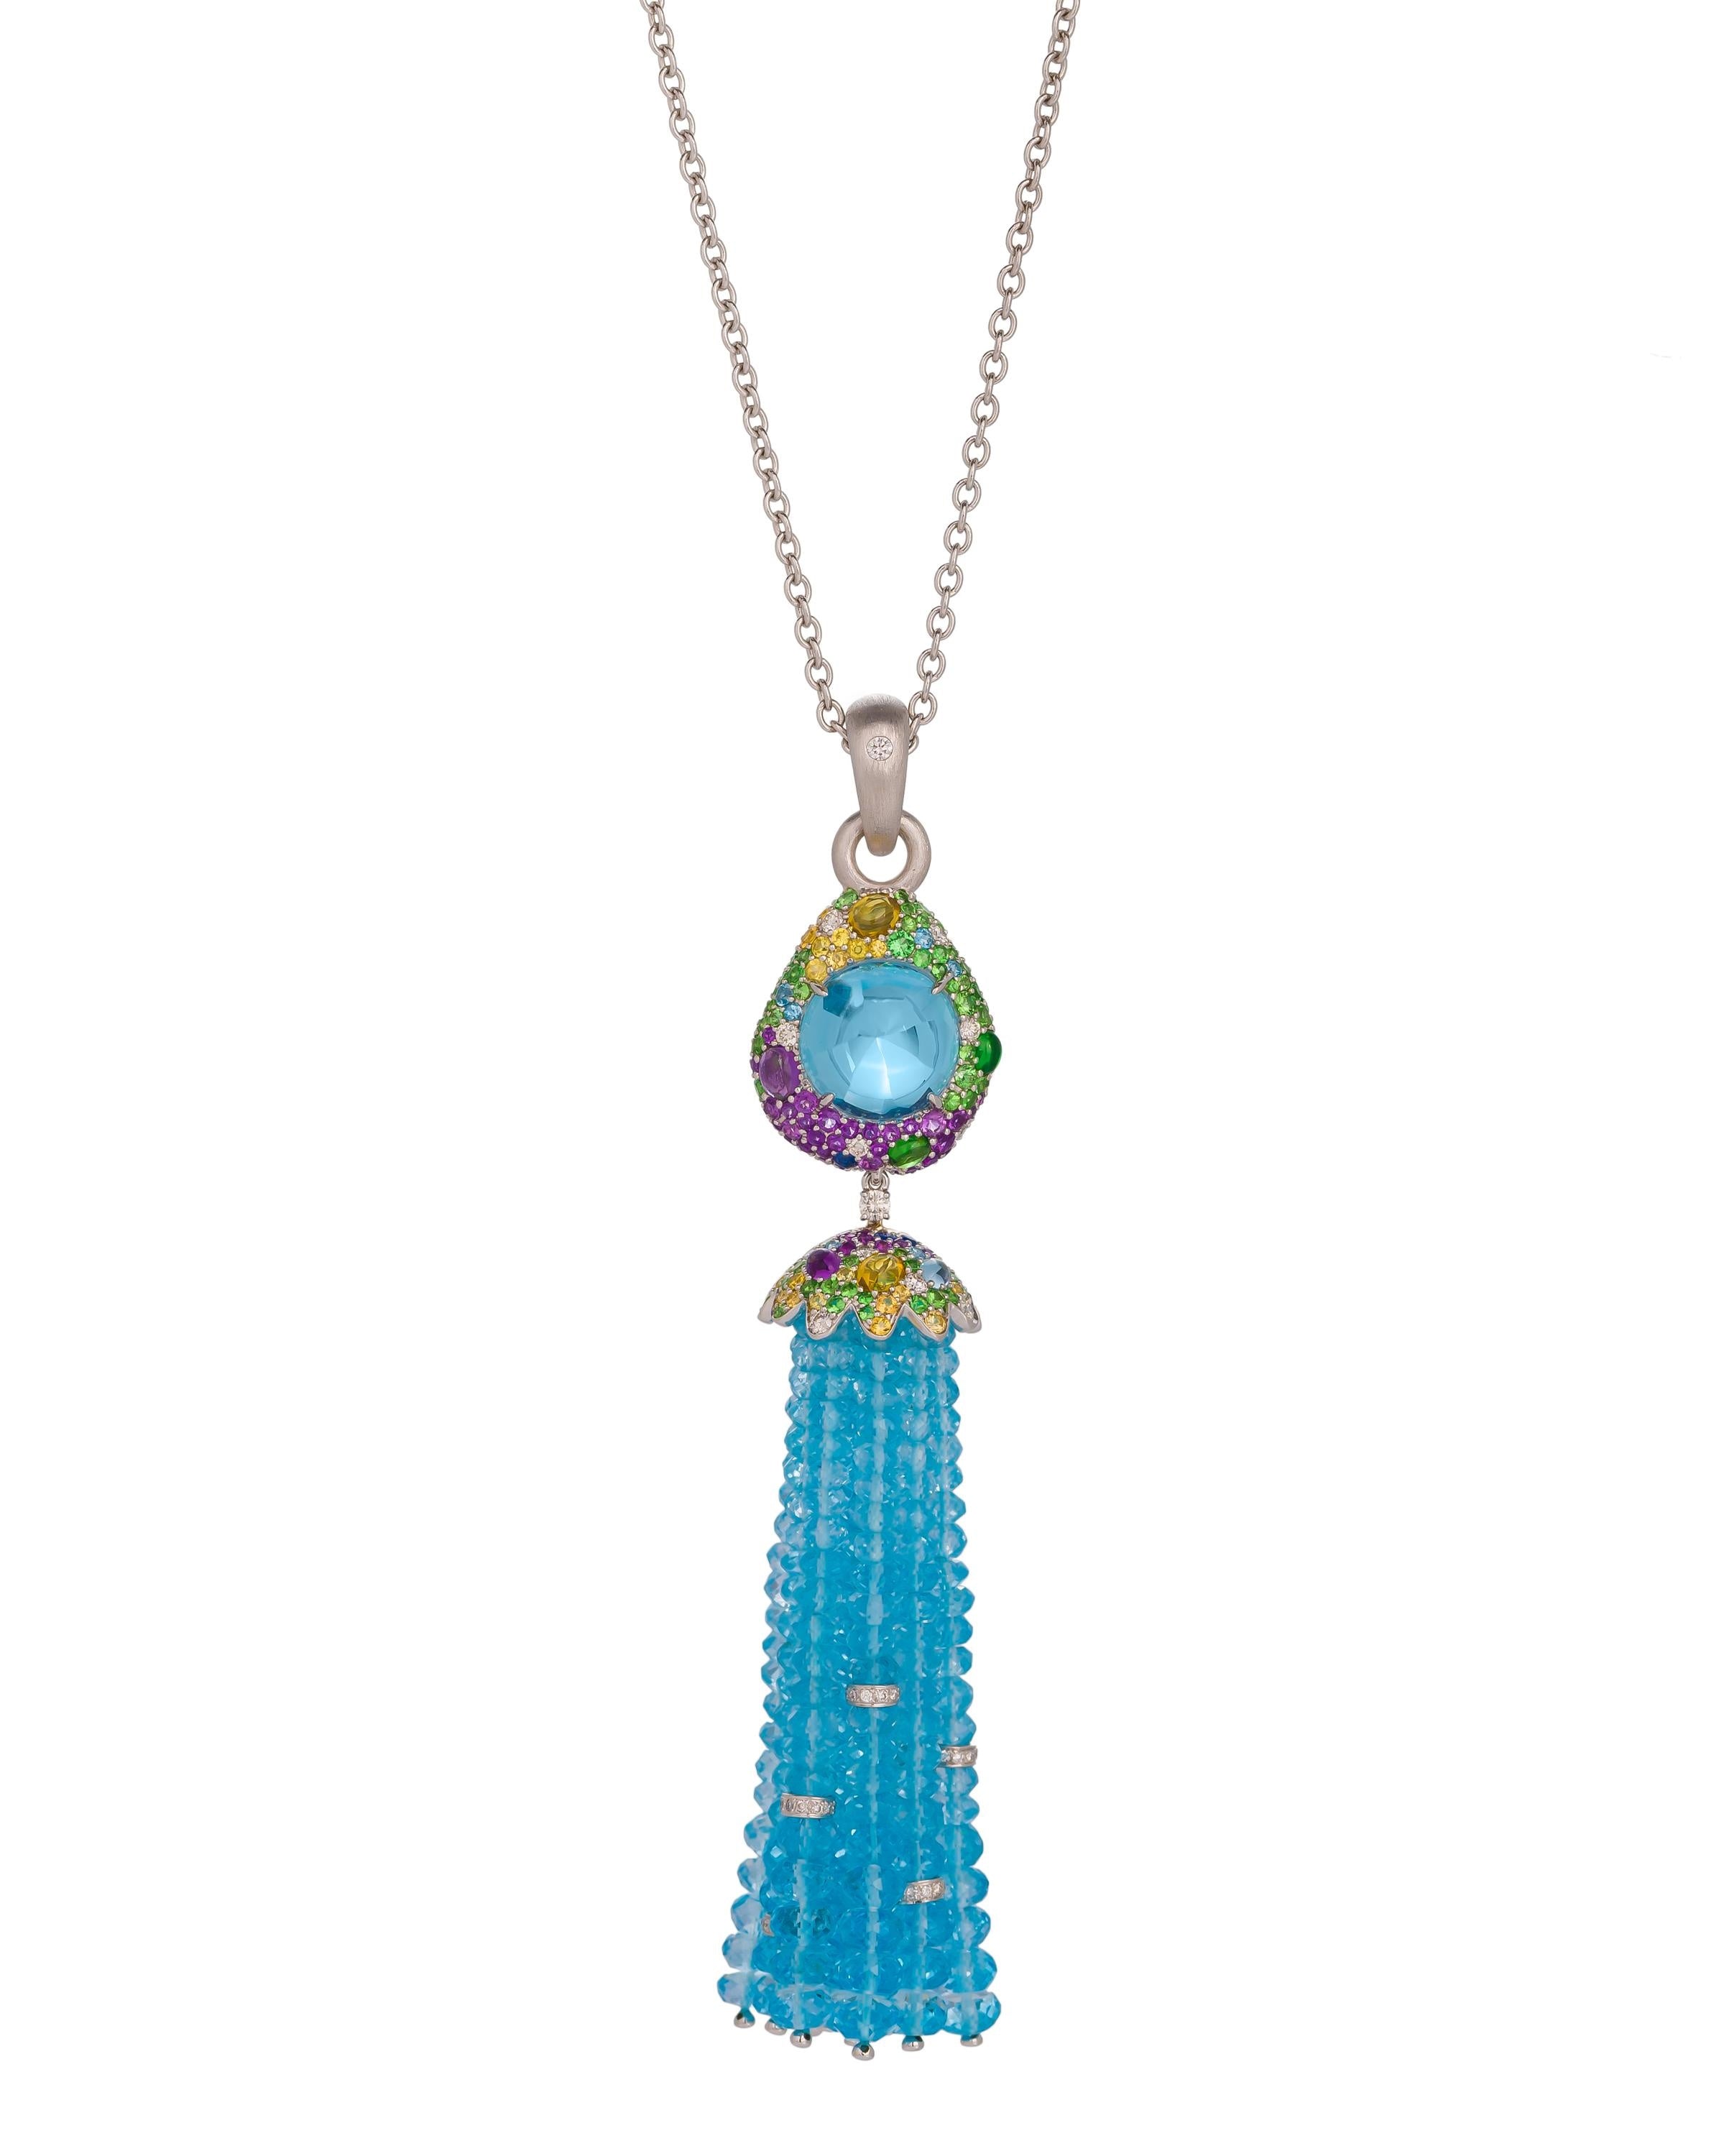 Blue topaz tassel pendant enhanced with a myriad of gemstones, crafted in 18 karat white gold